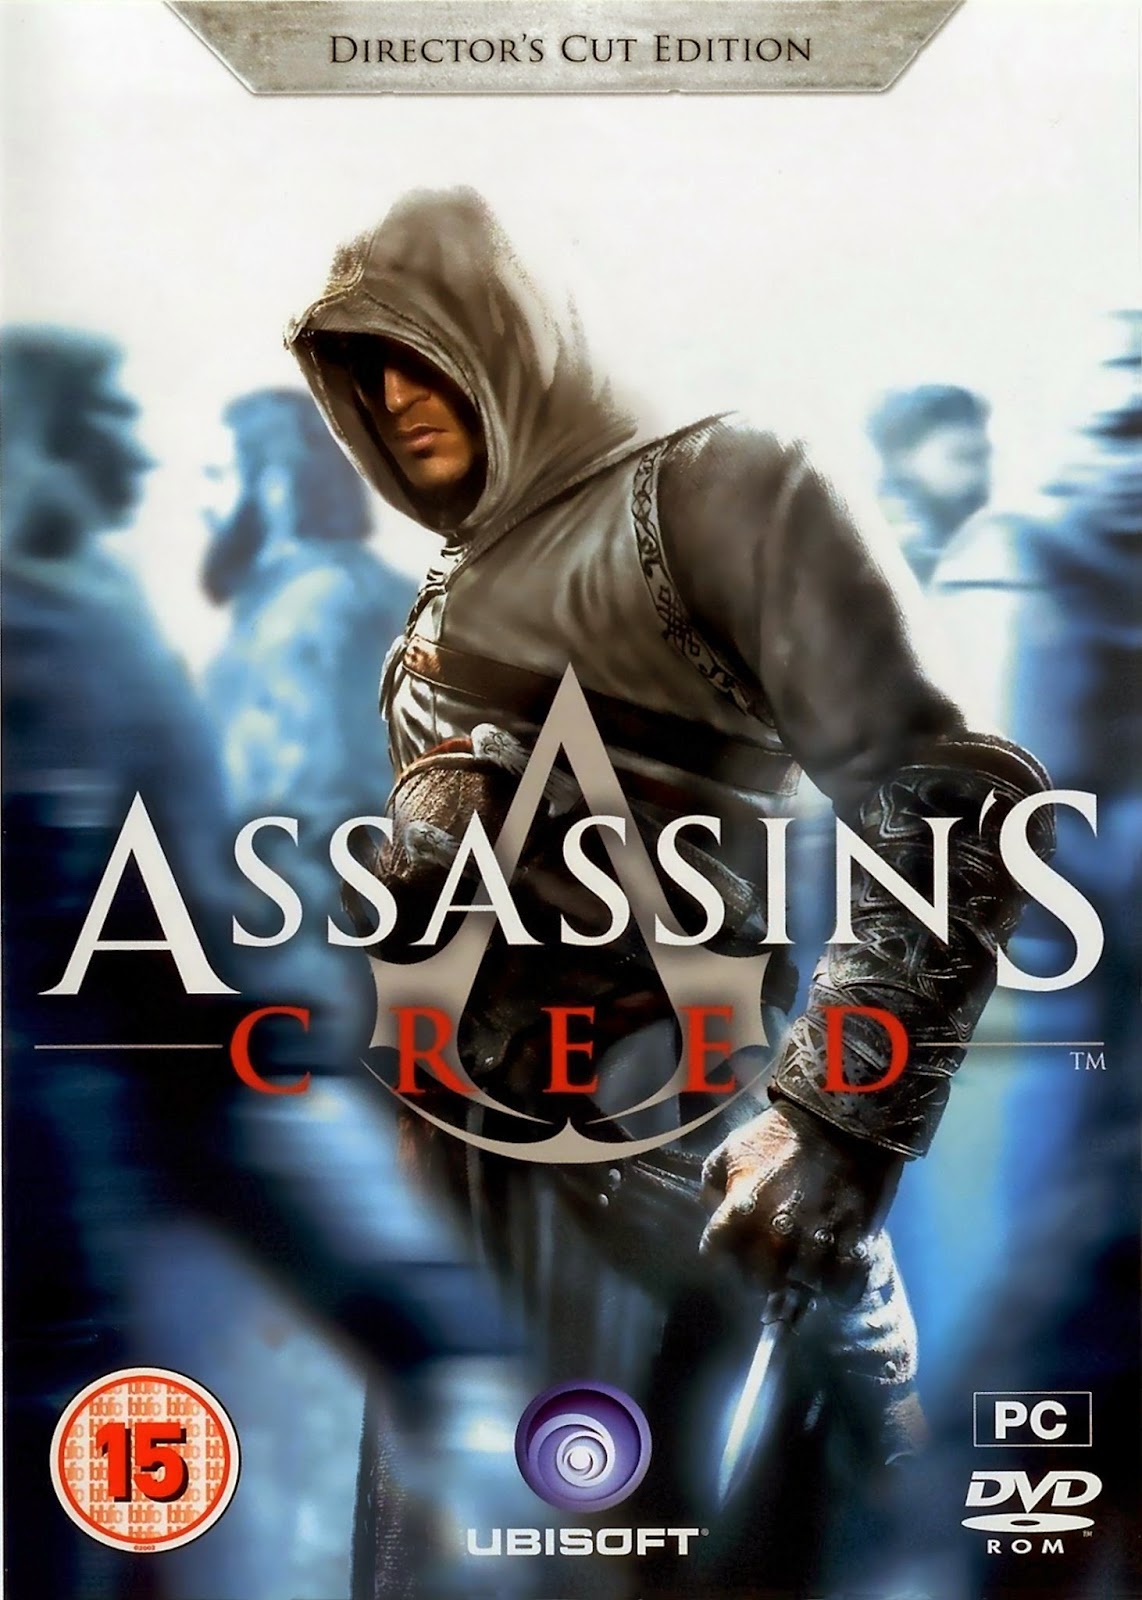 assassins creed ii skidrow crack.rar download